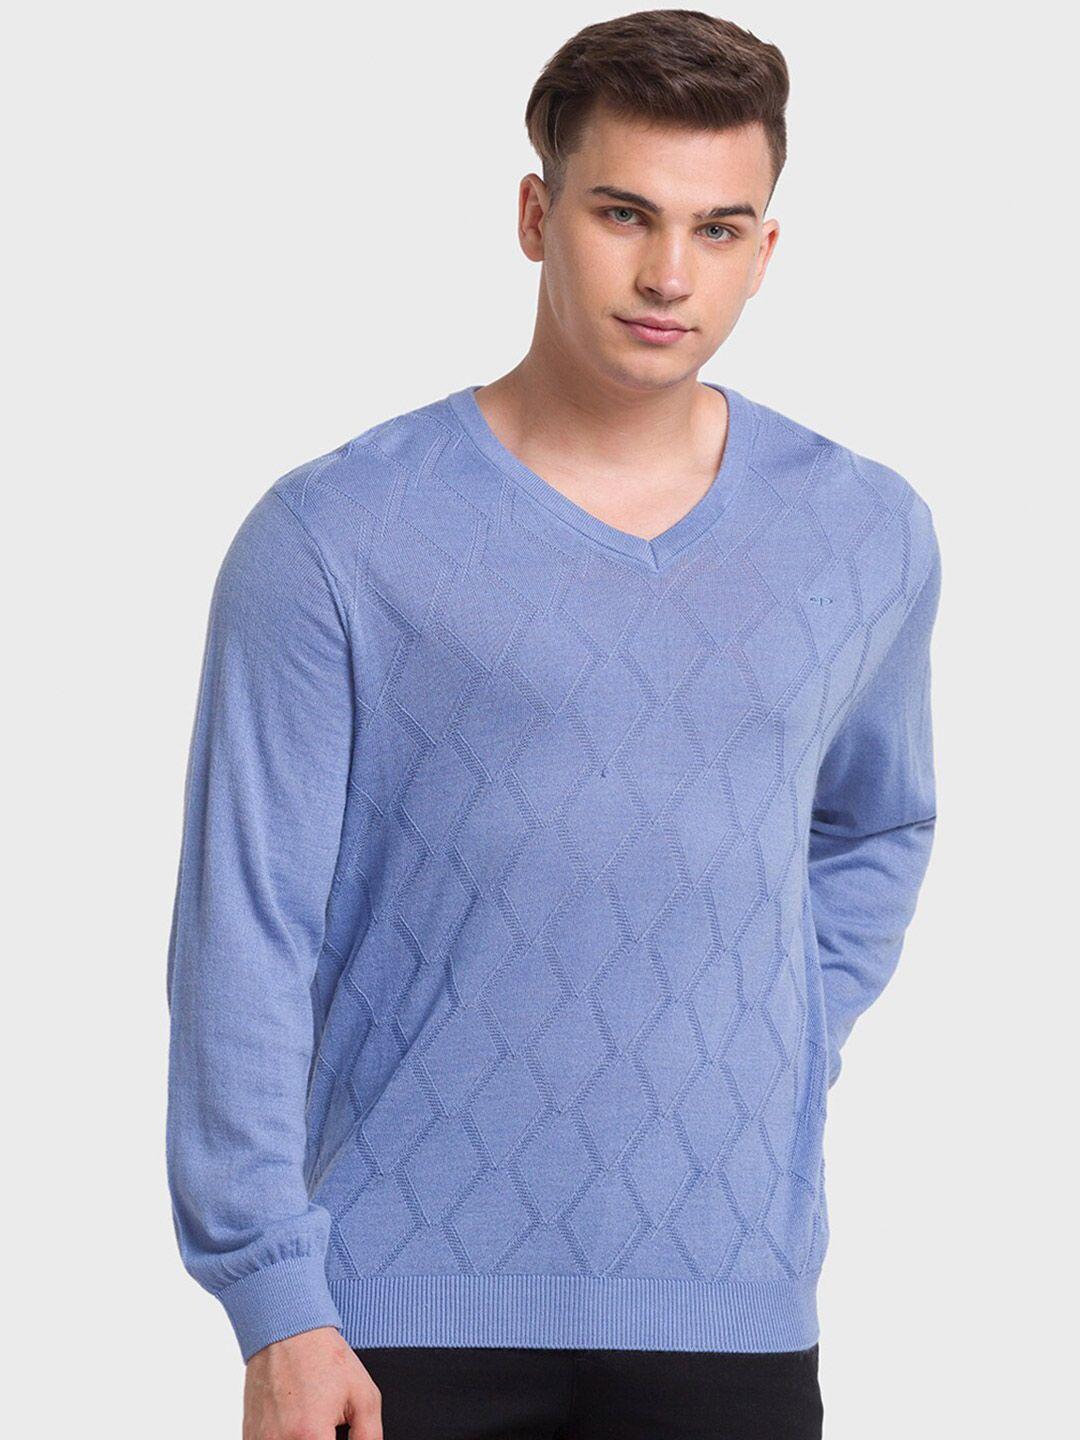 colorplus-geometric-self-design-long-sleeves-pullover